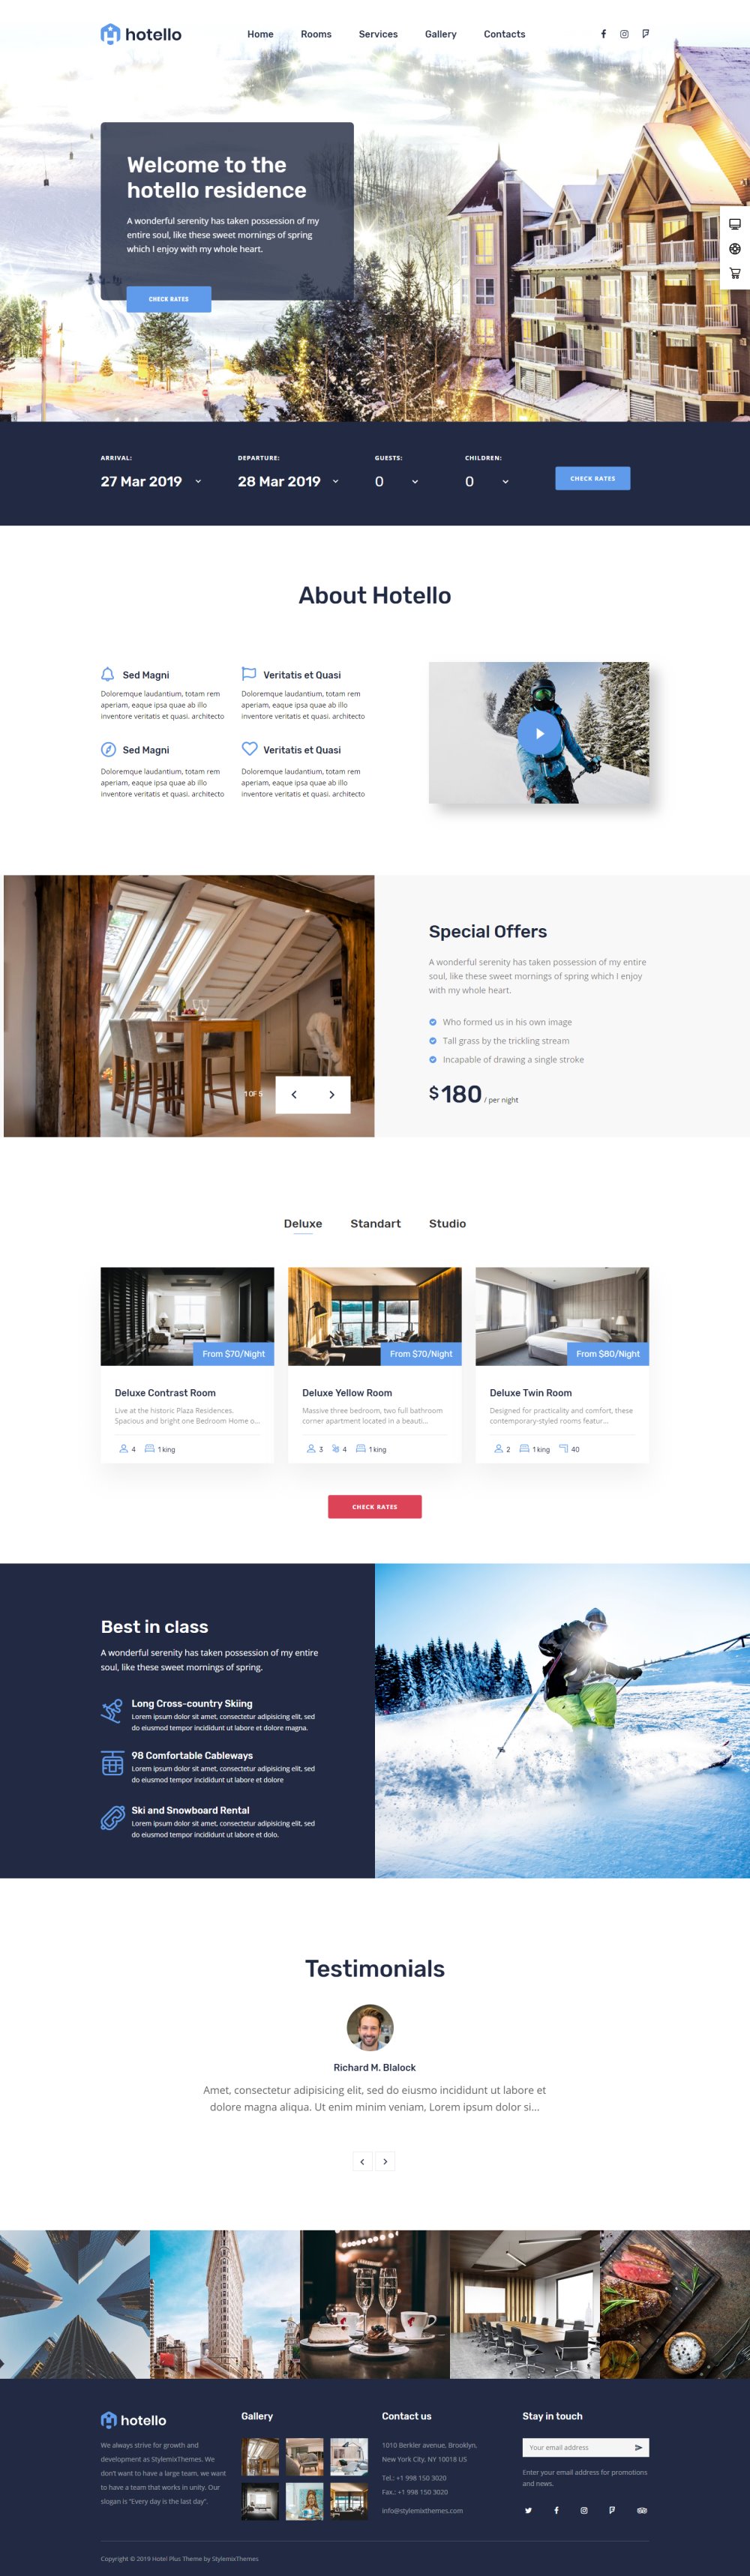 Hotel-Web-Design-Inspiration-02